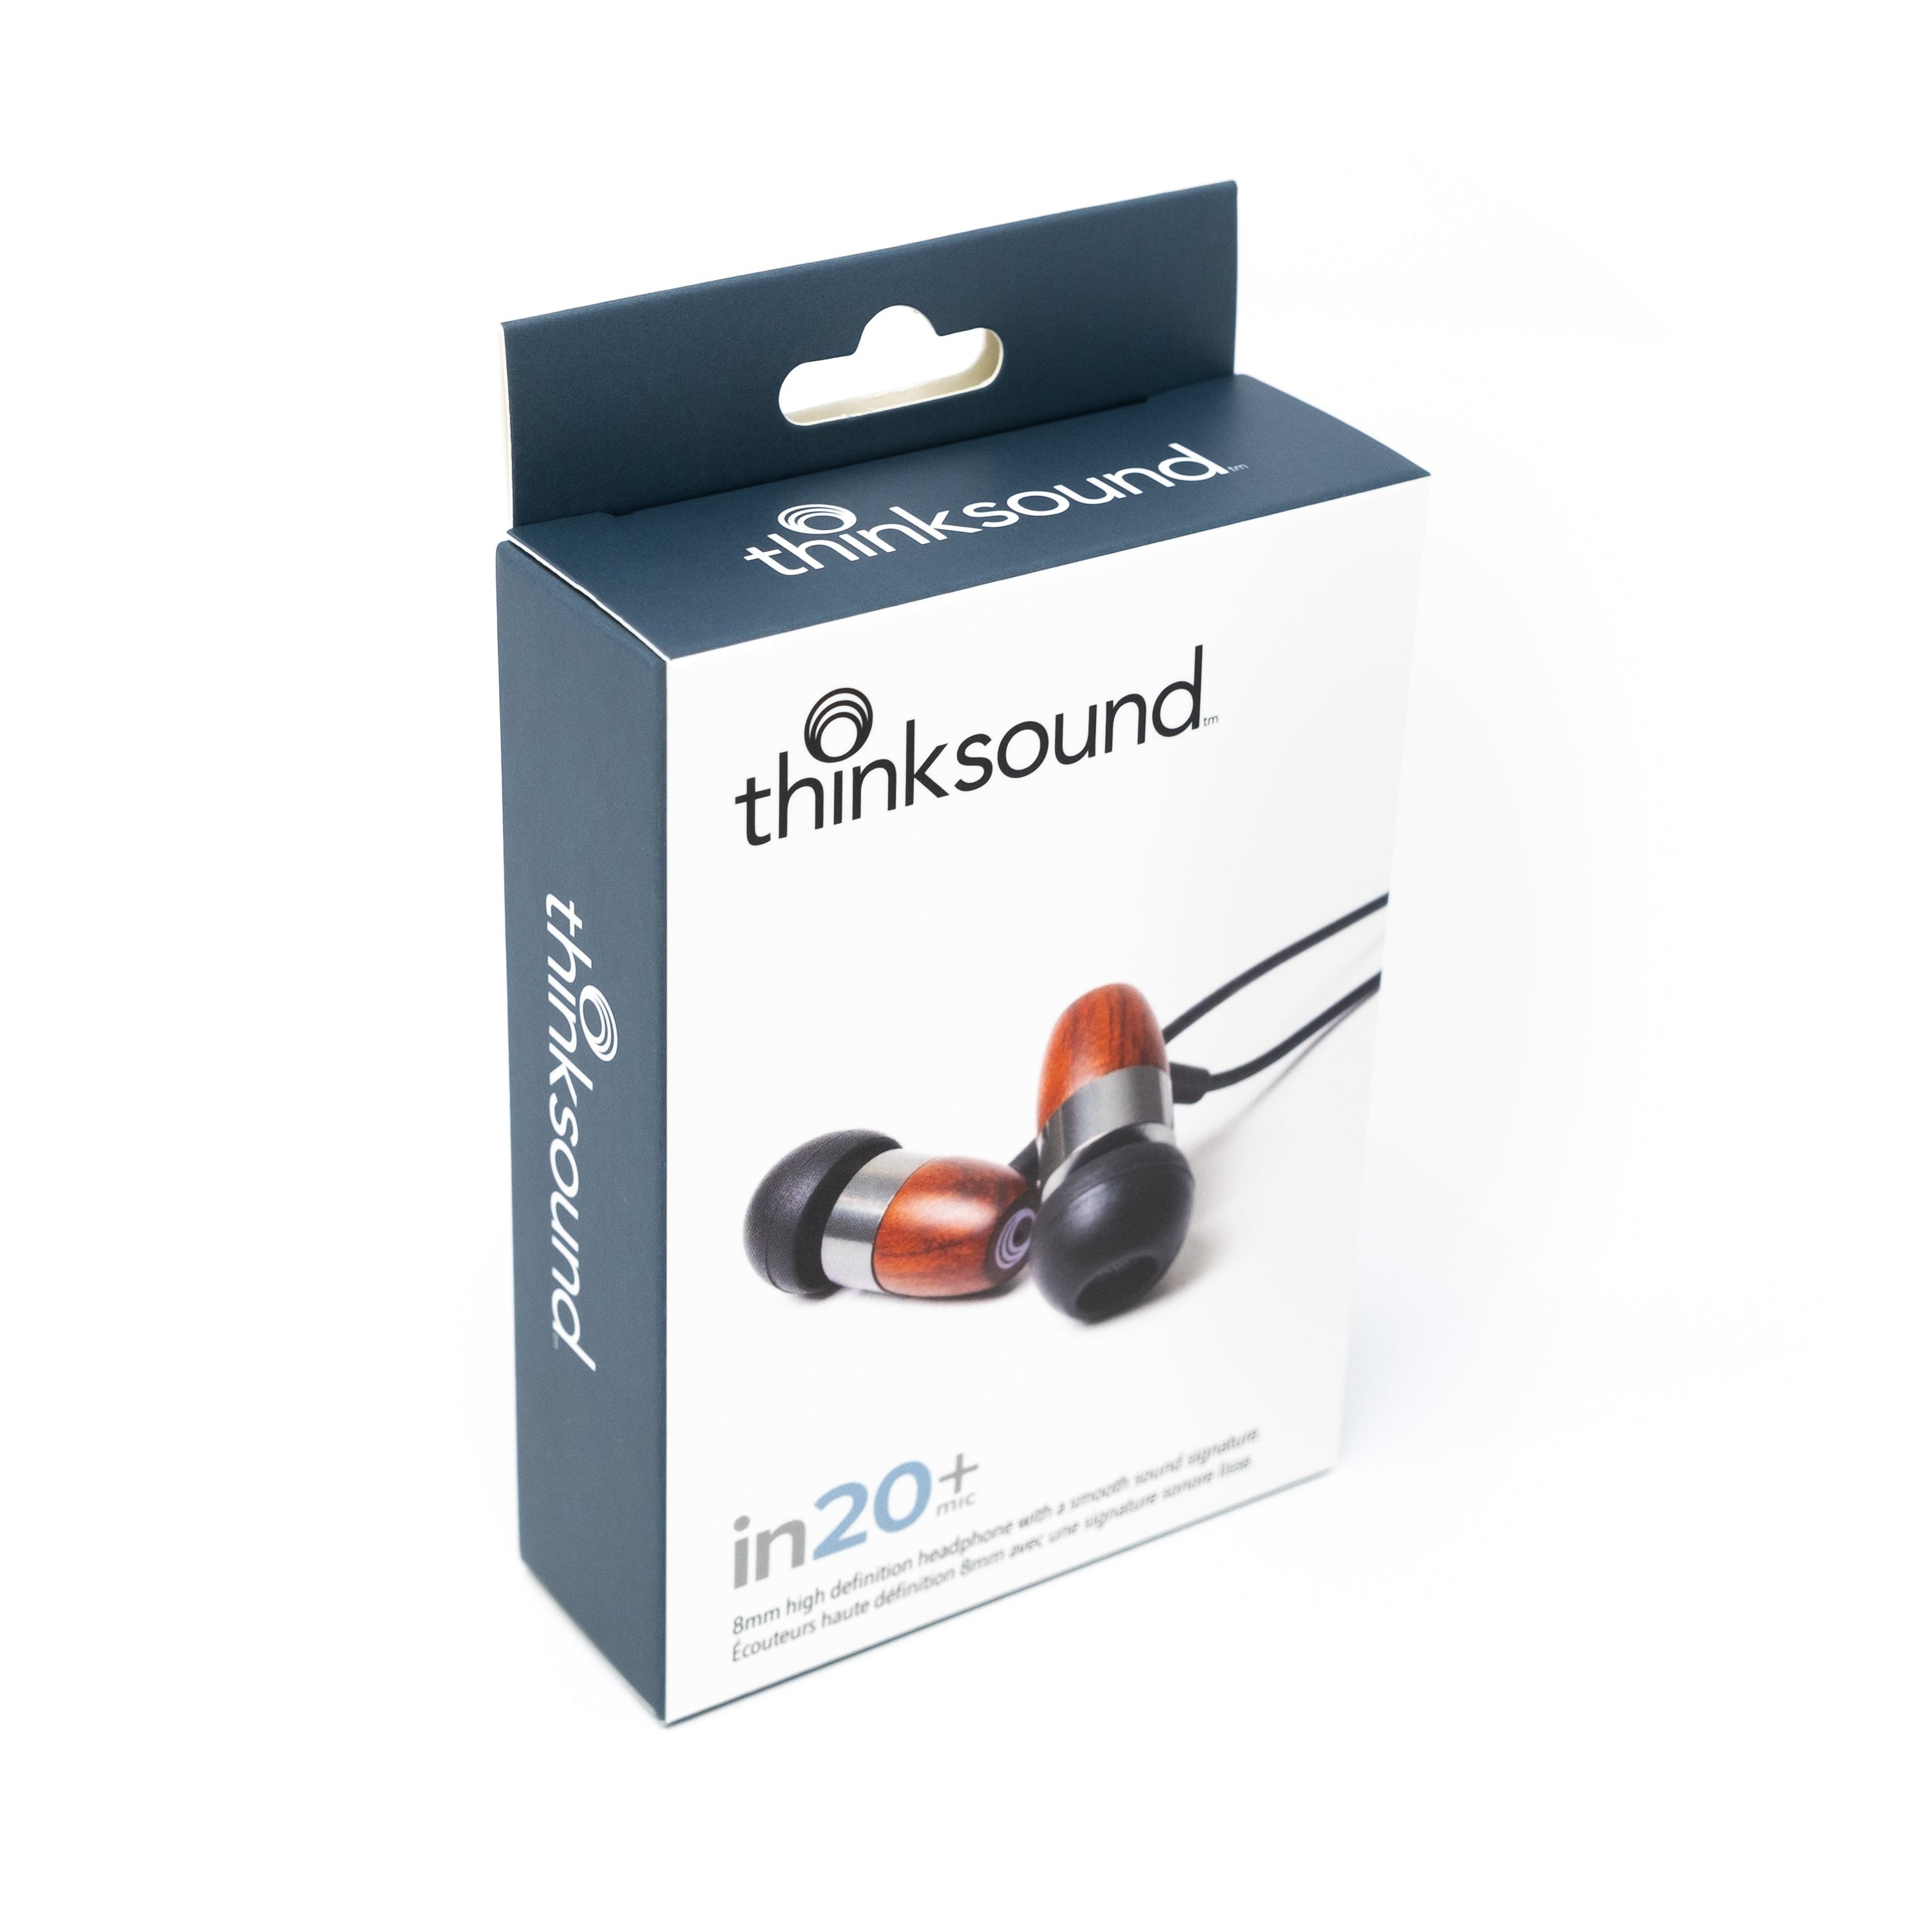 thinksound in20 headphone gift box